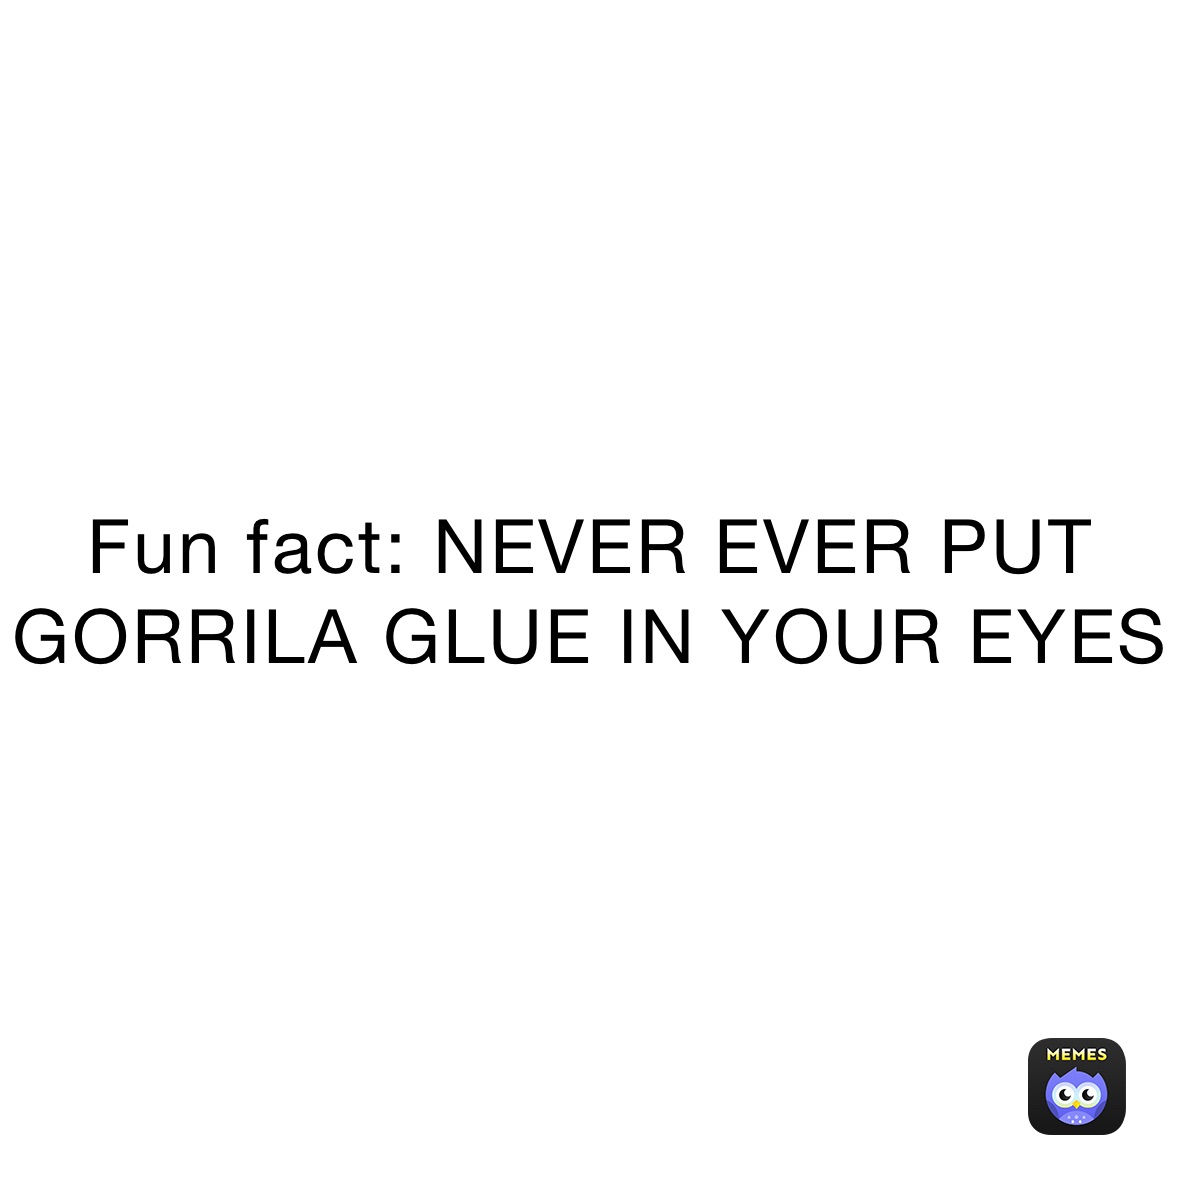 Fun fact: NEVER EVER PUT GORRILA GLUE IN YOUR EYES